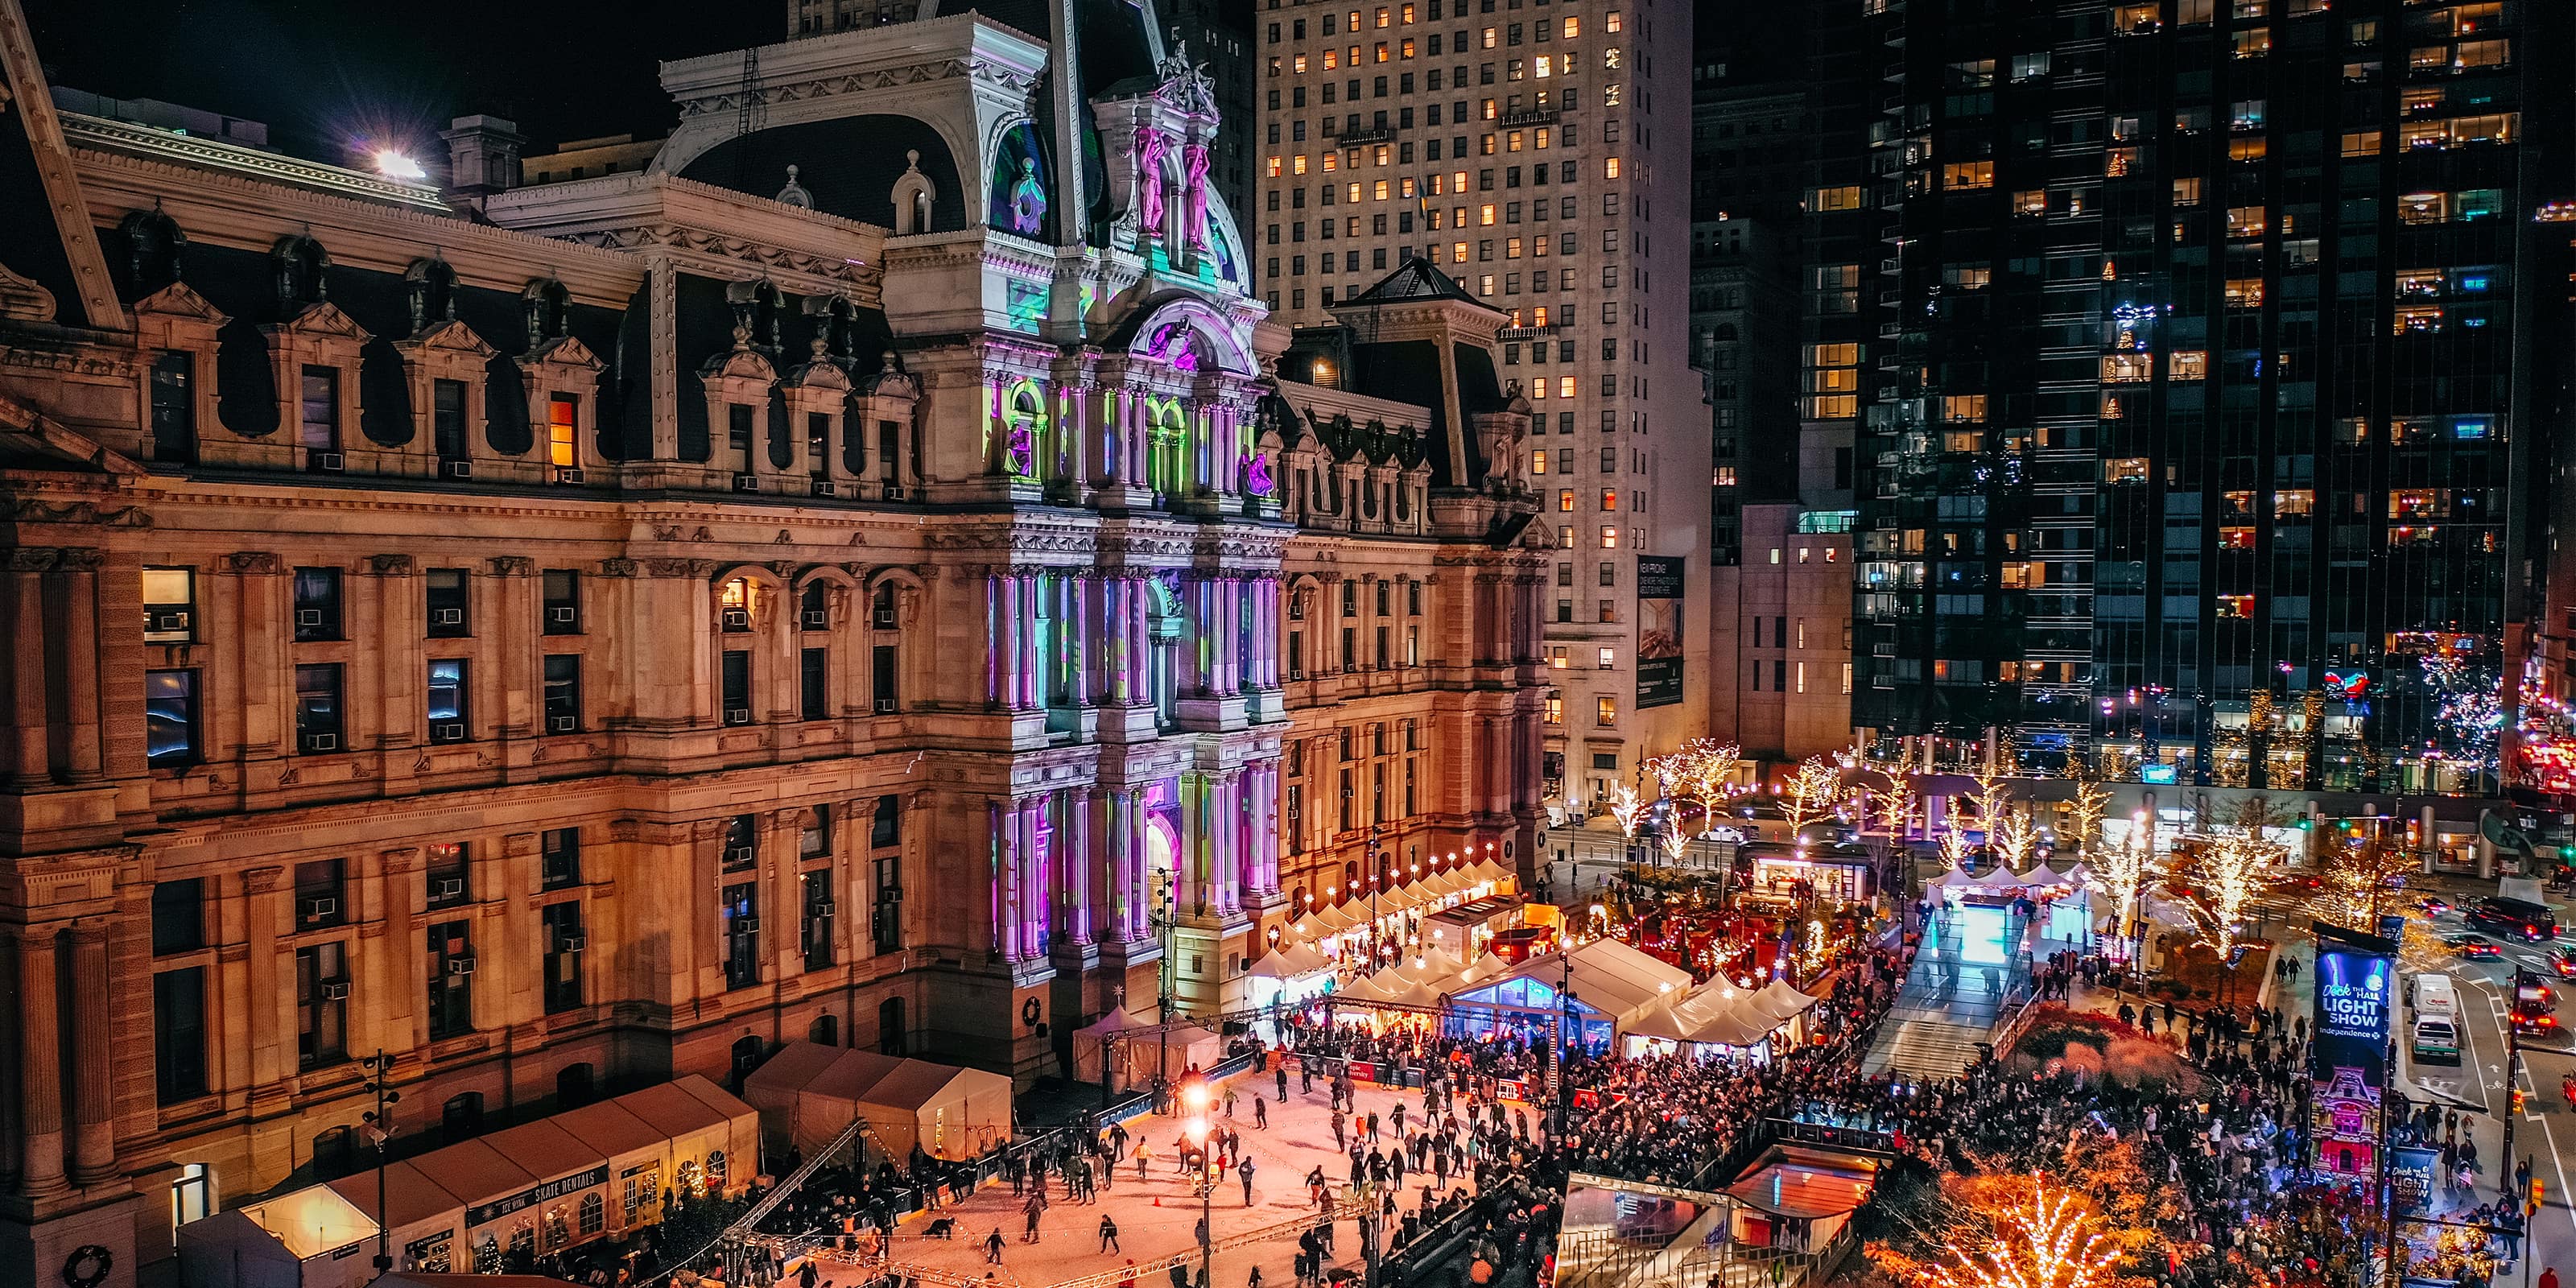 Philadelphia center city at Christmas time at night.